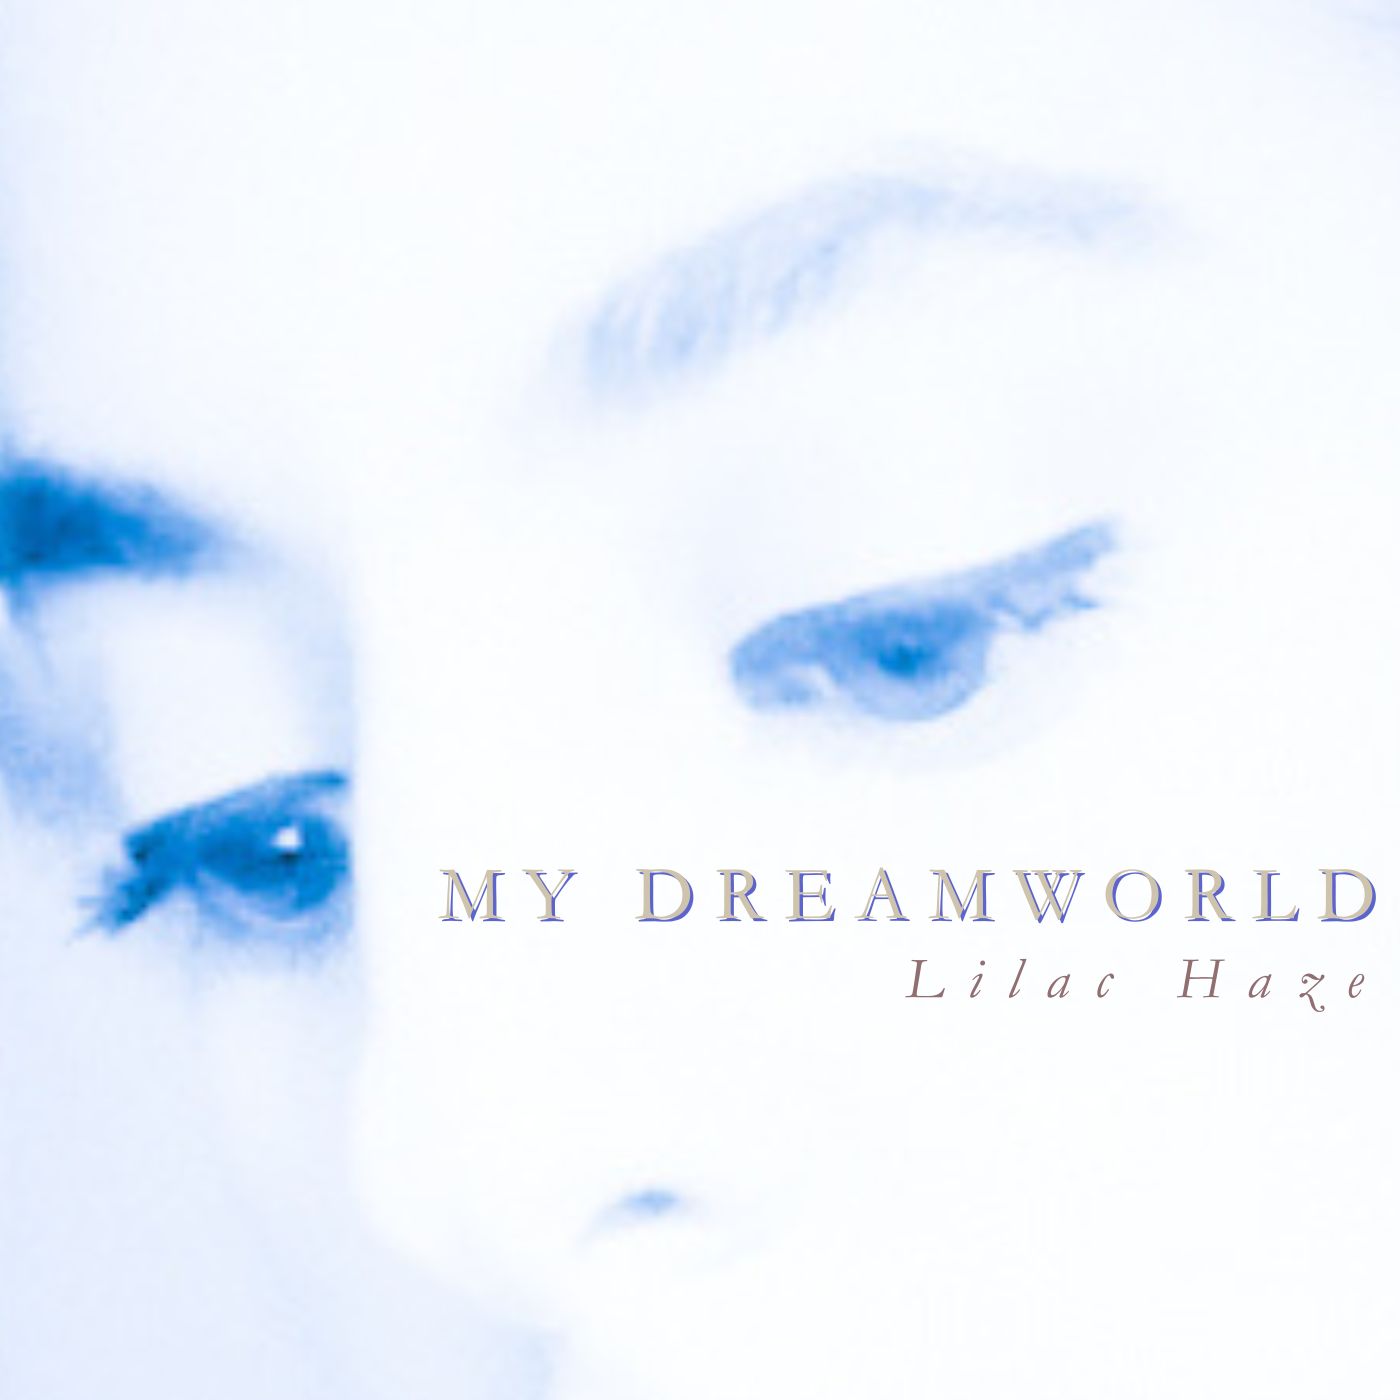 DEBUT EP REVIEW: My Dreamworld by Lilac Haze